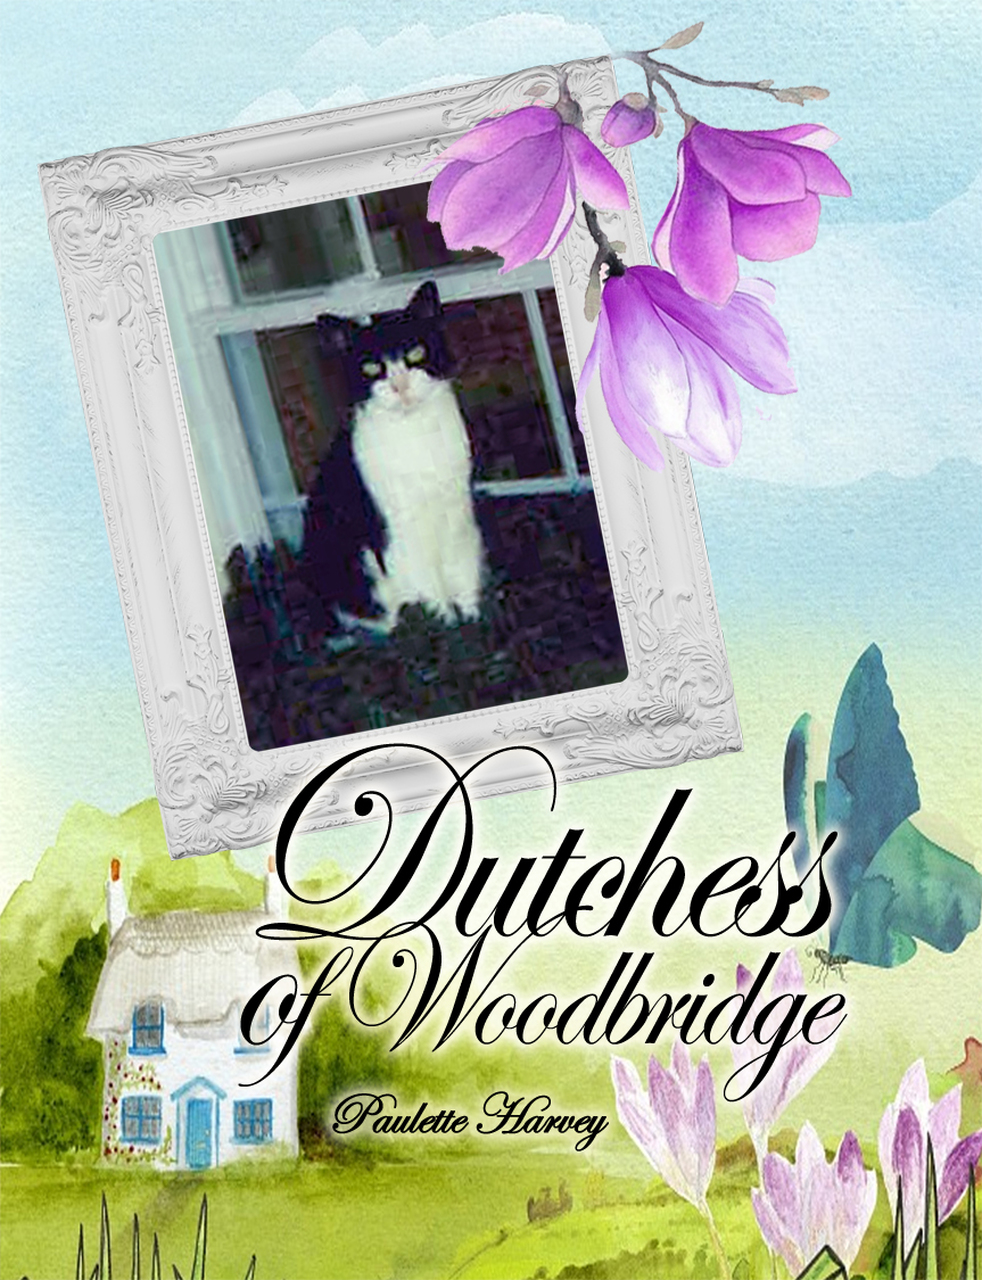 dutchess of woodbridge